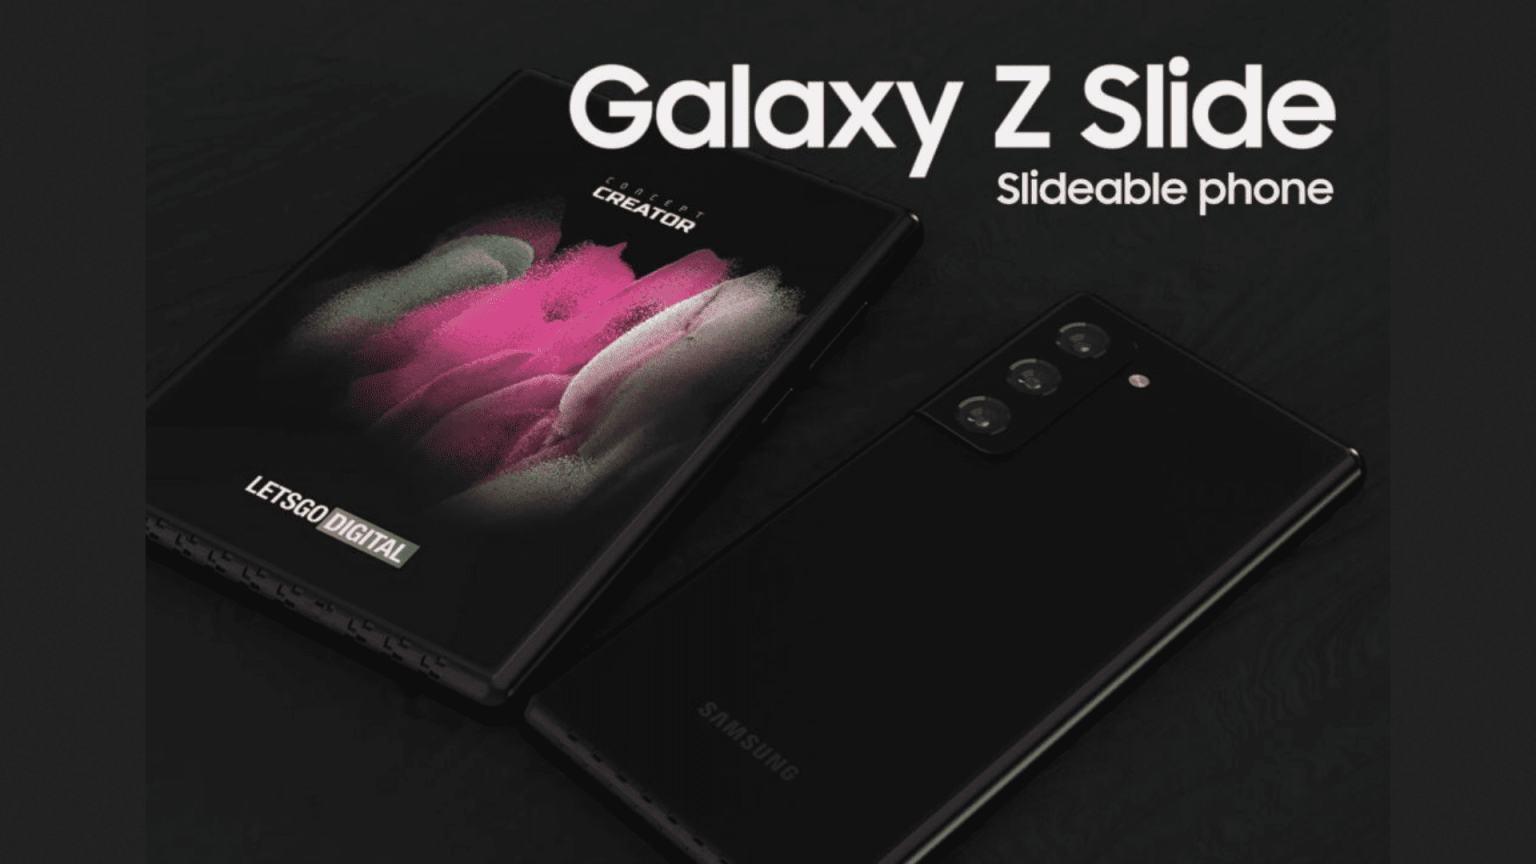 Galaxy Z Slide